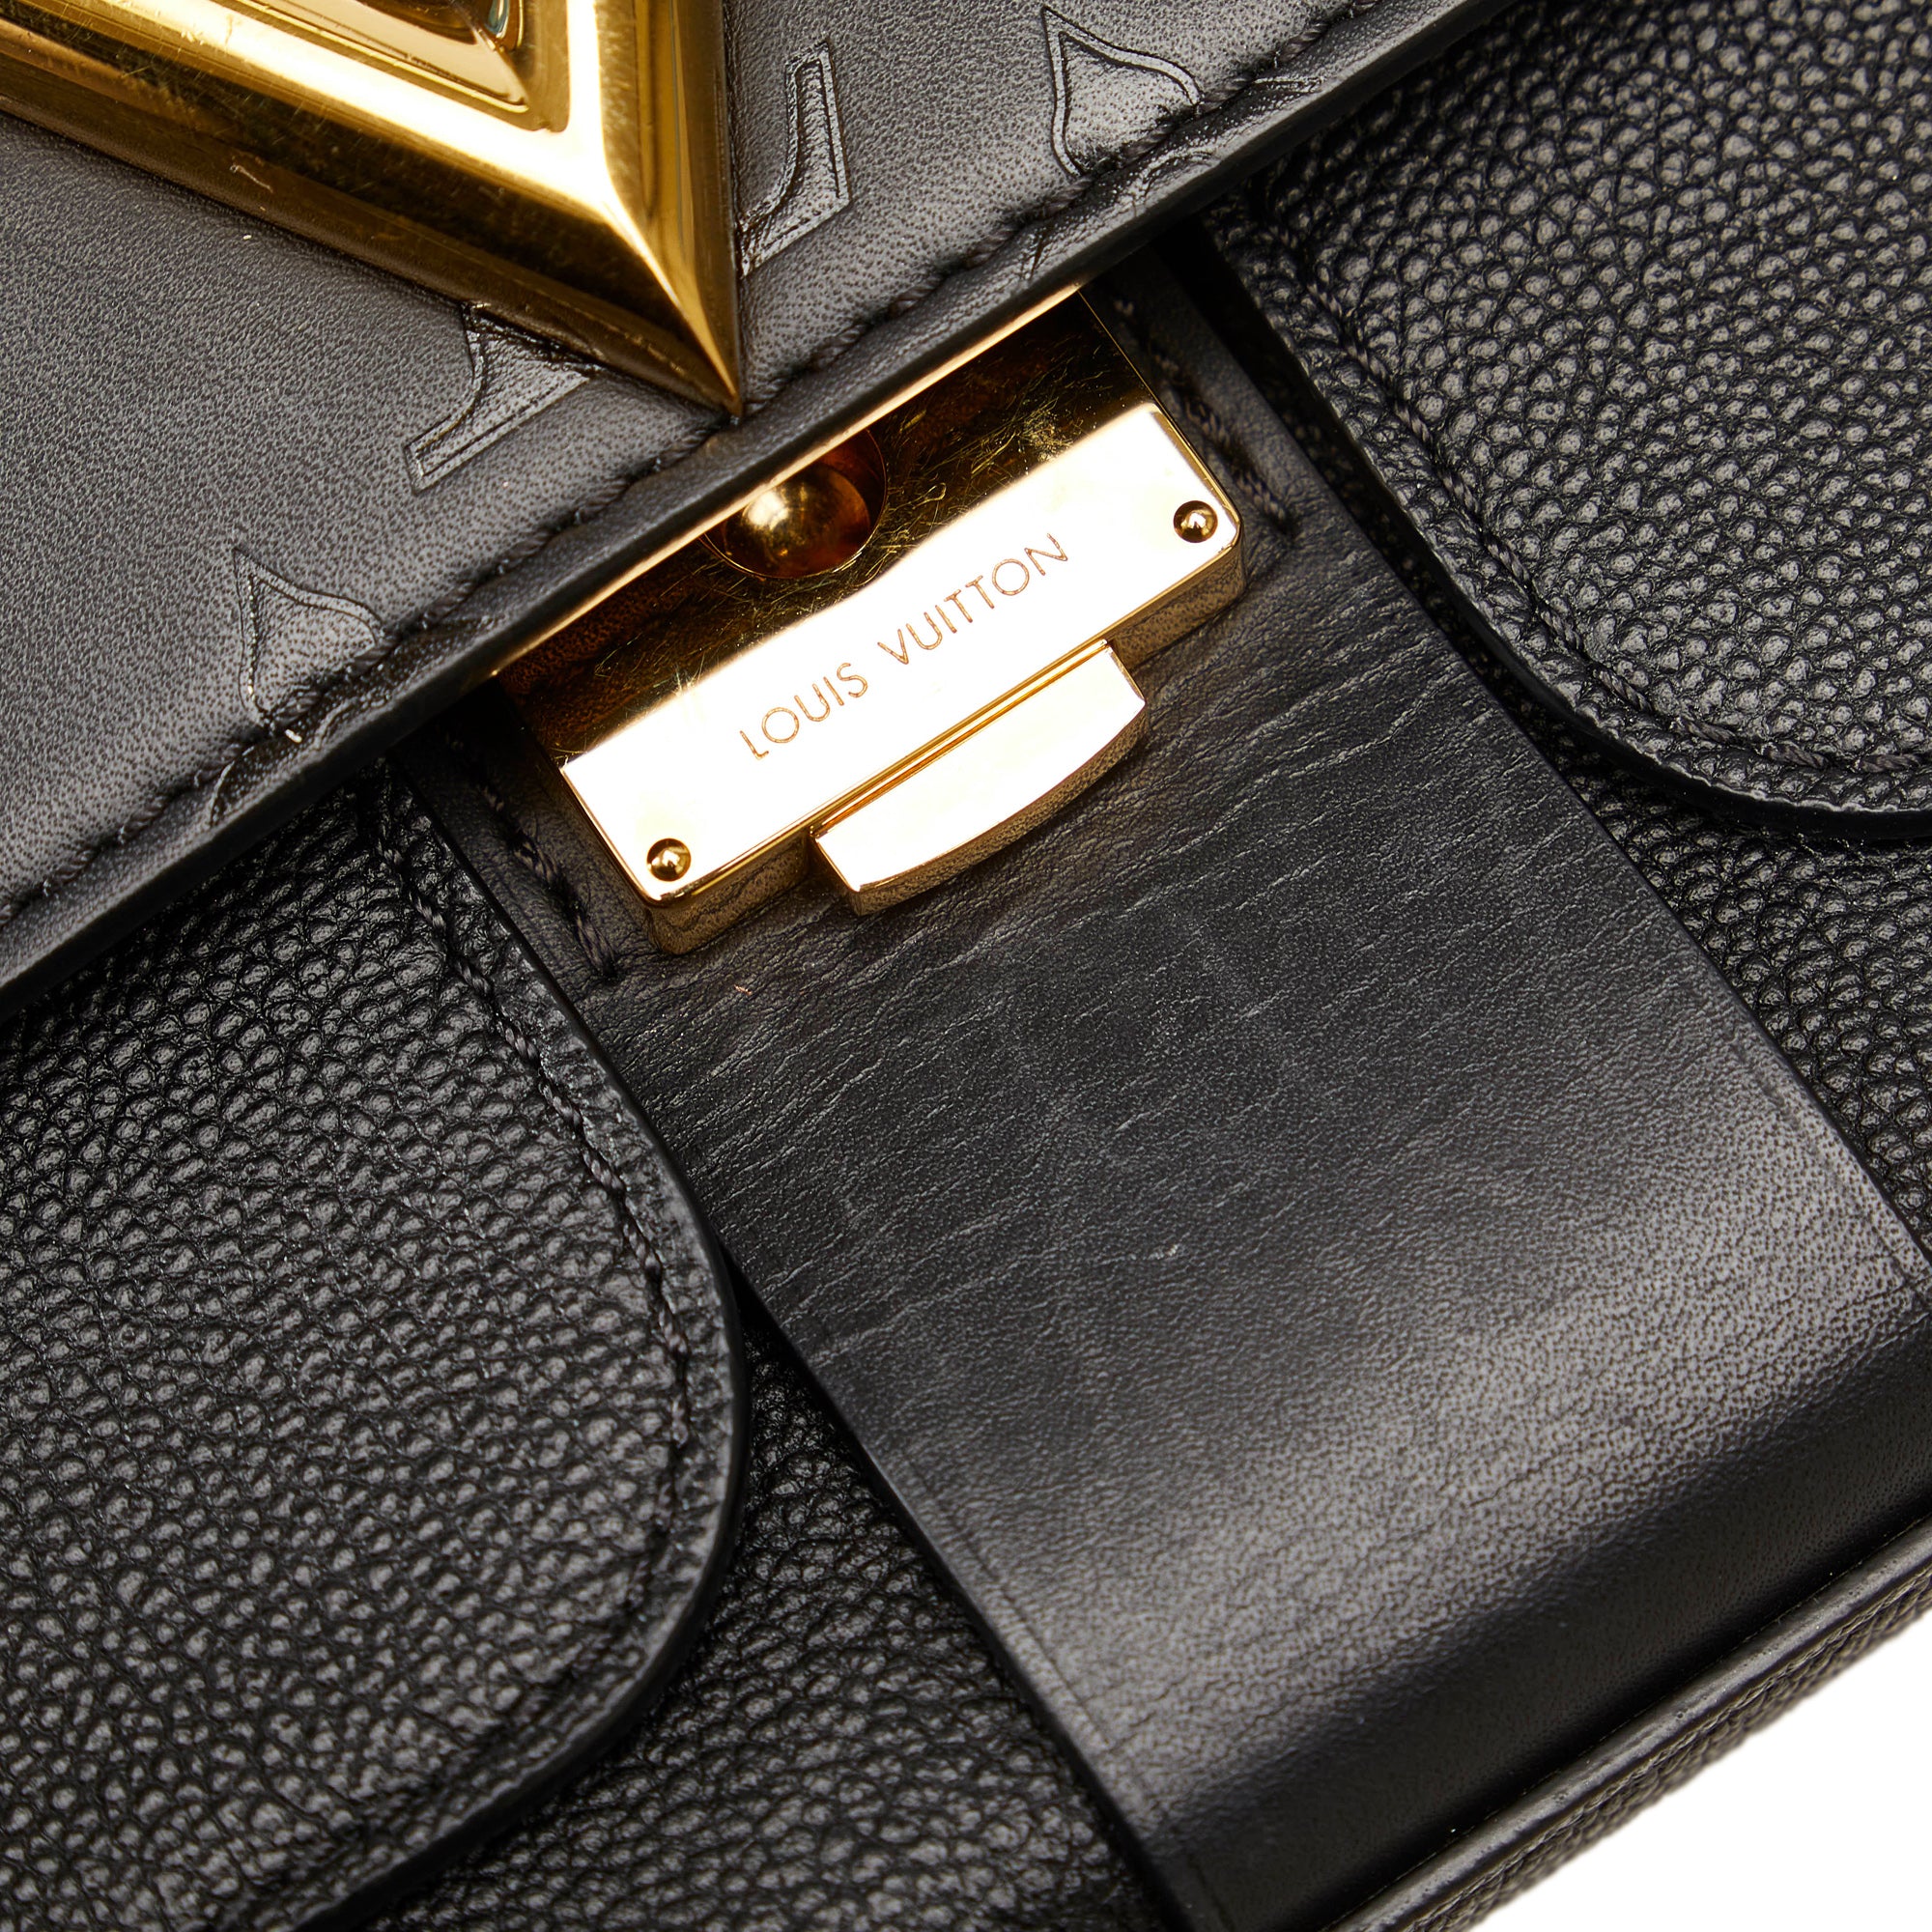 Louis Vuitton Black Monogram Very Leather Chain Bag Golden ref